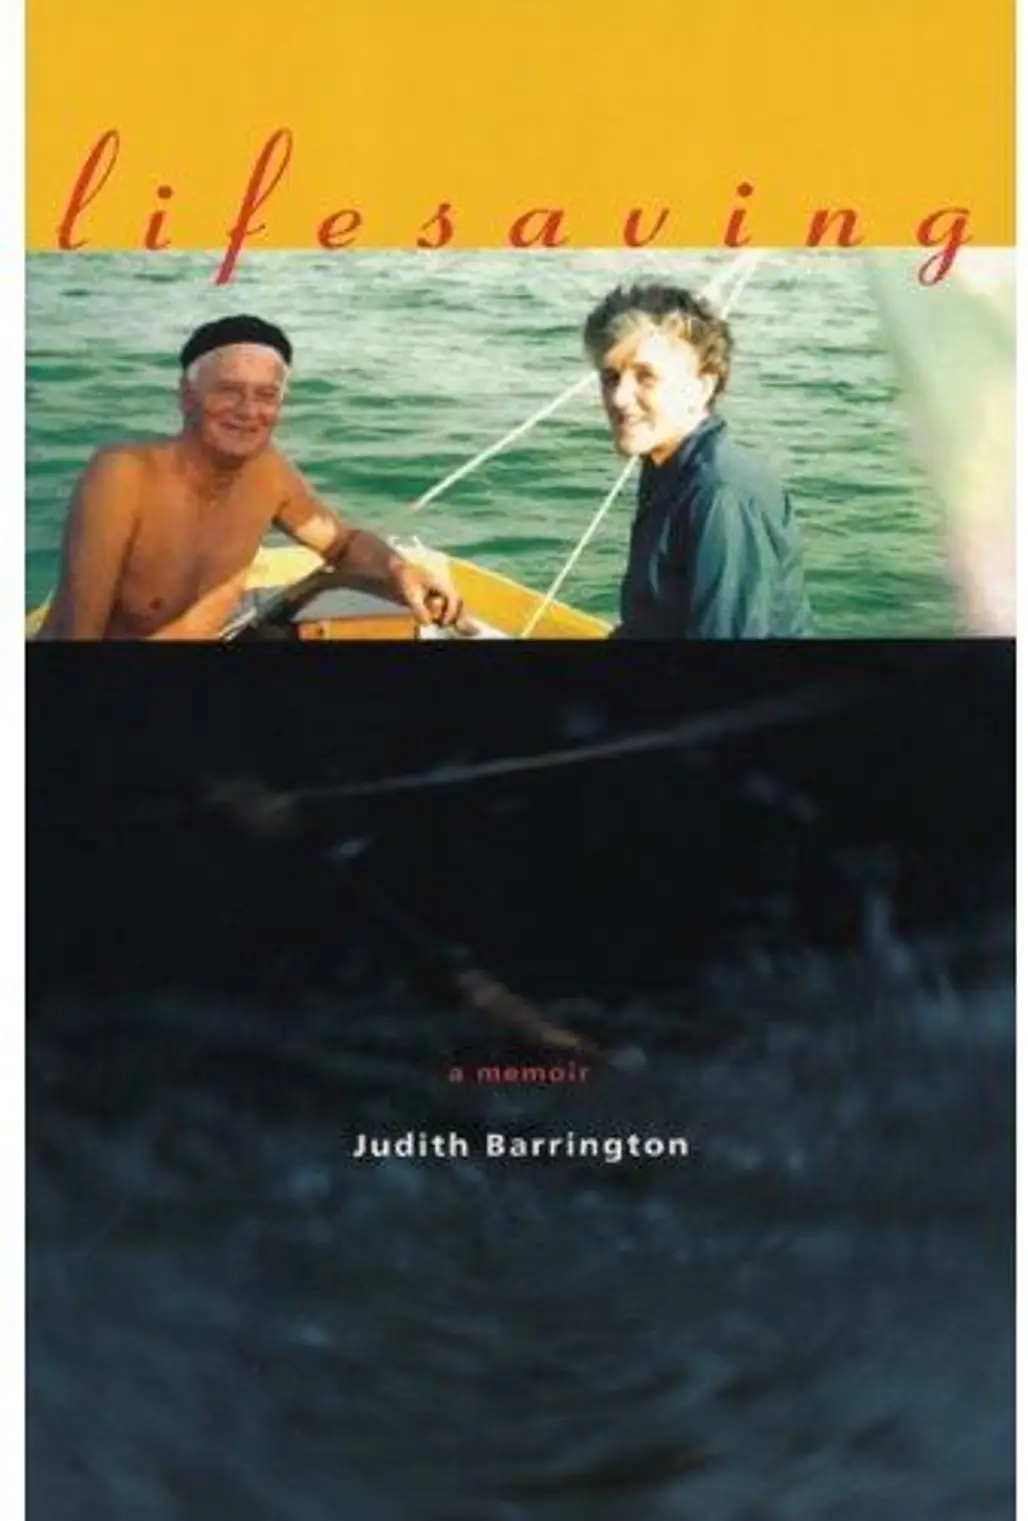 Lifesaving: a Memoir by Judith Barrington